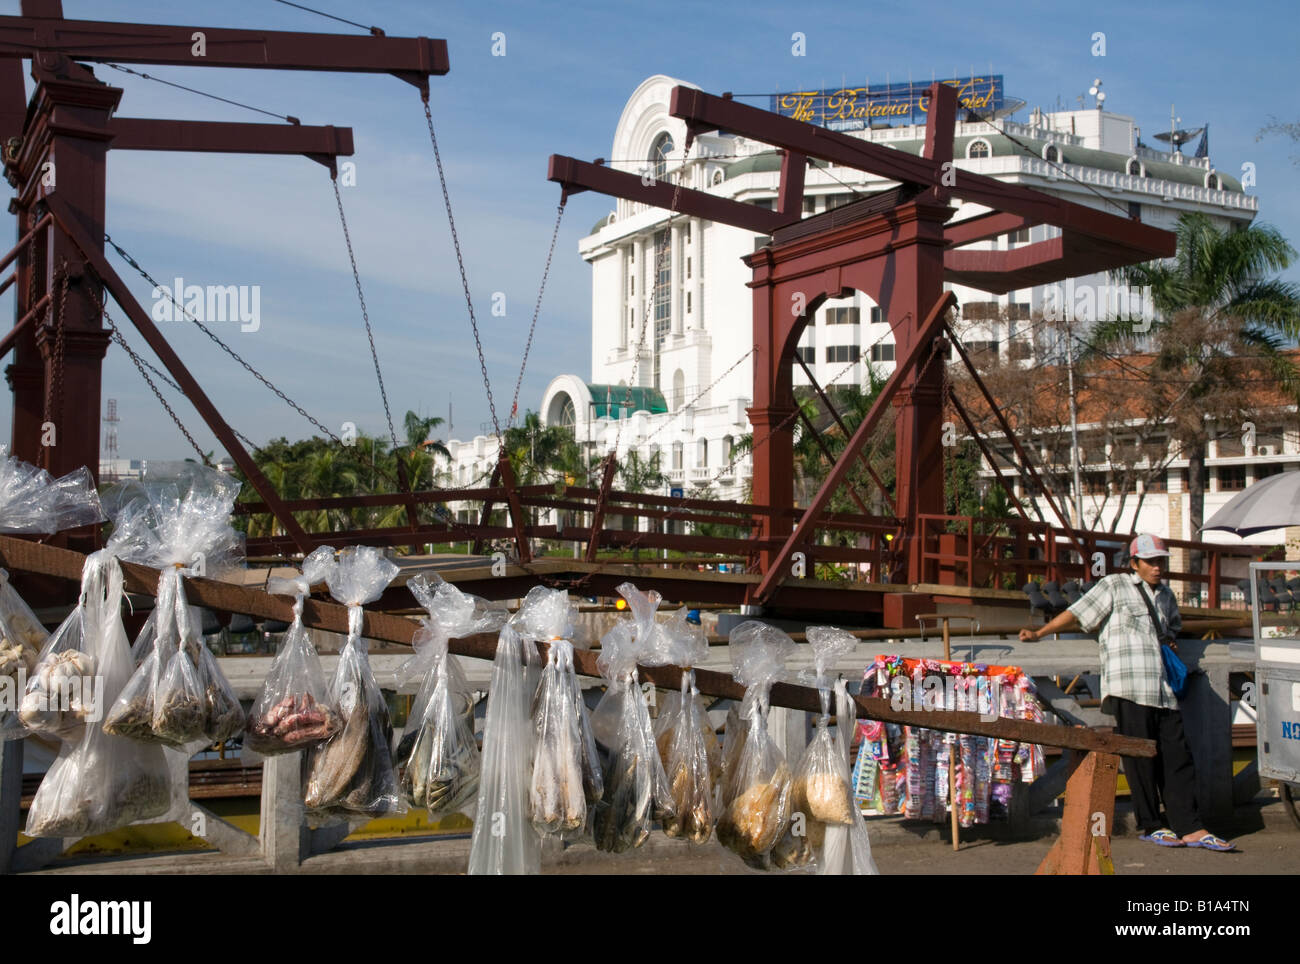 Indonesia Java Island Jakarata Batavia Chicken Market drawbridge view with hanging plastique bags in frgd and batavia hotel Stock Photo